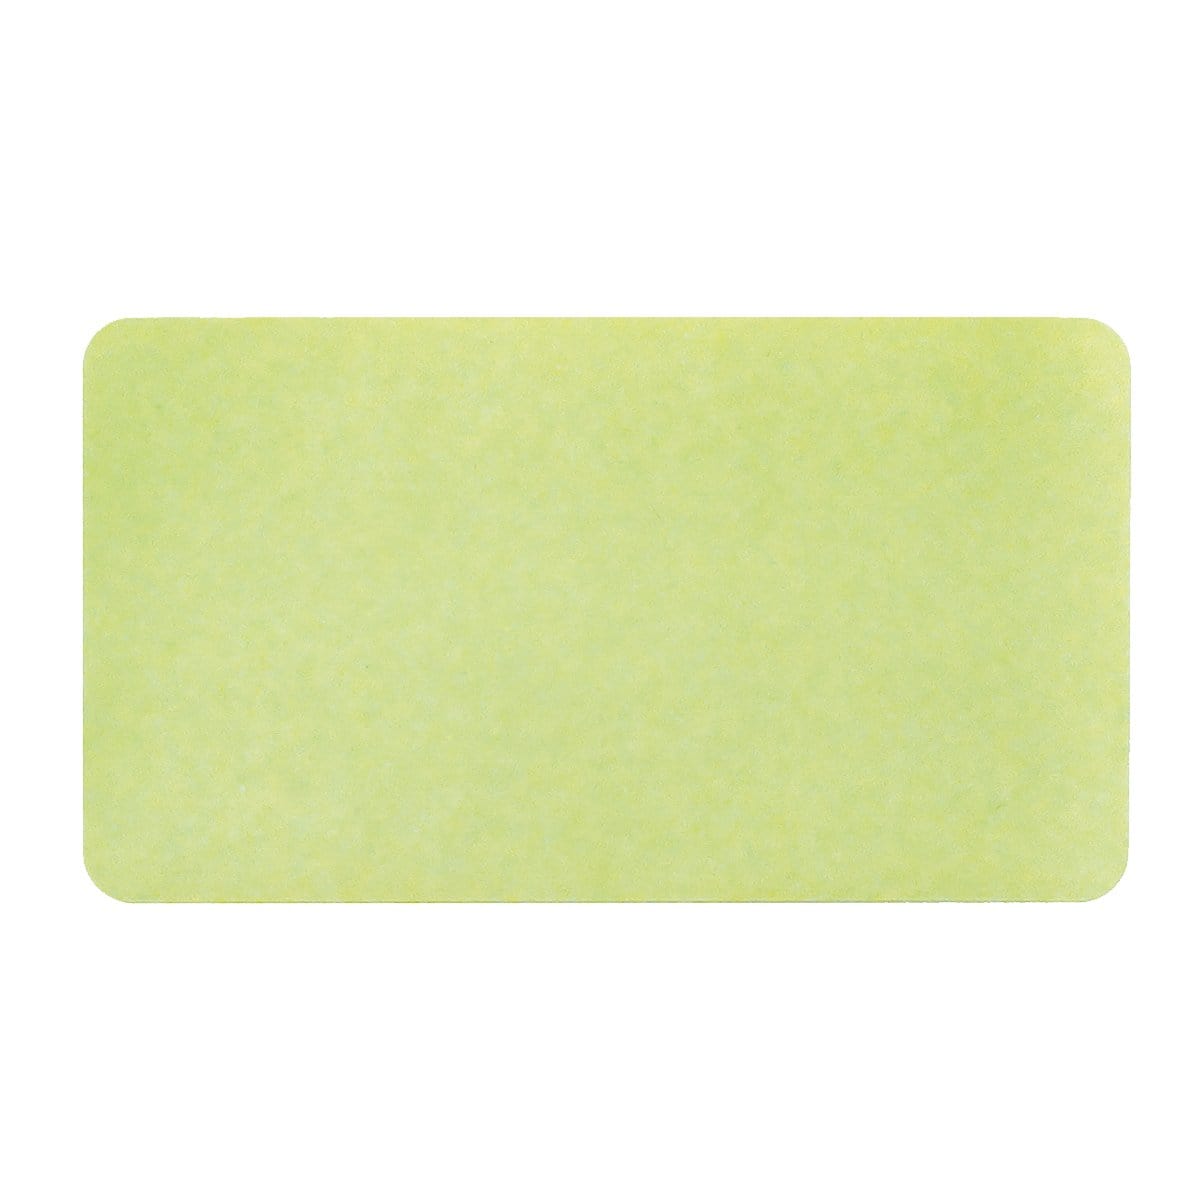 Green Thermal-printable Non-expiring Printable Adhesive Badges, Box of 1000 (P/N 0408X) 04085